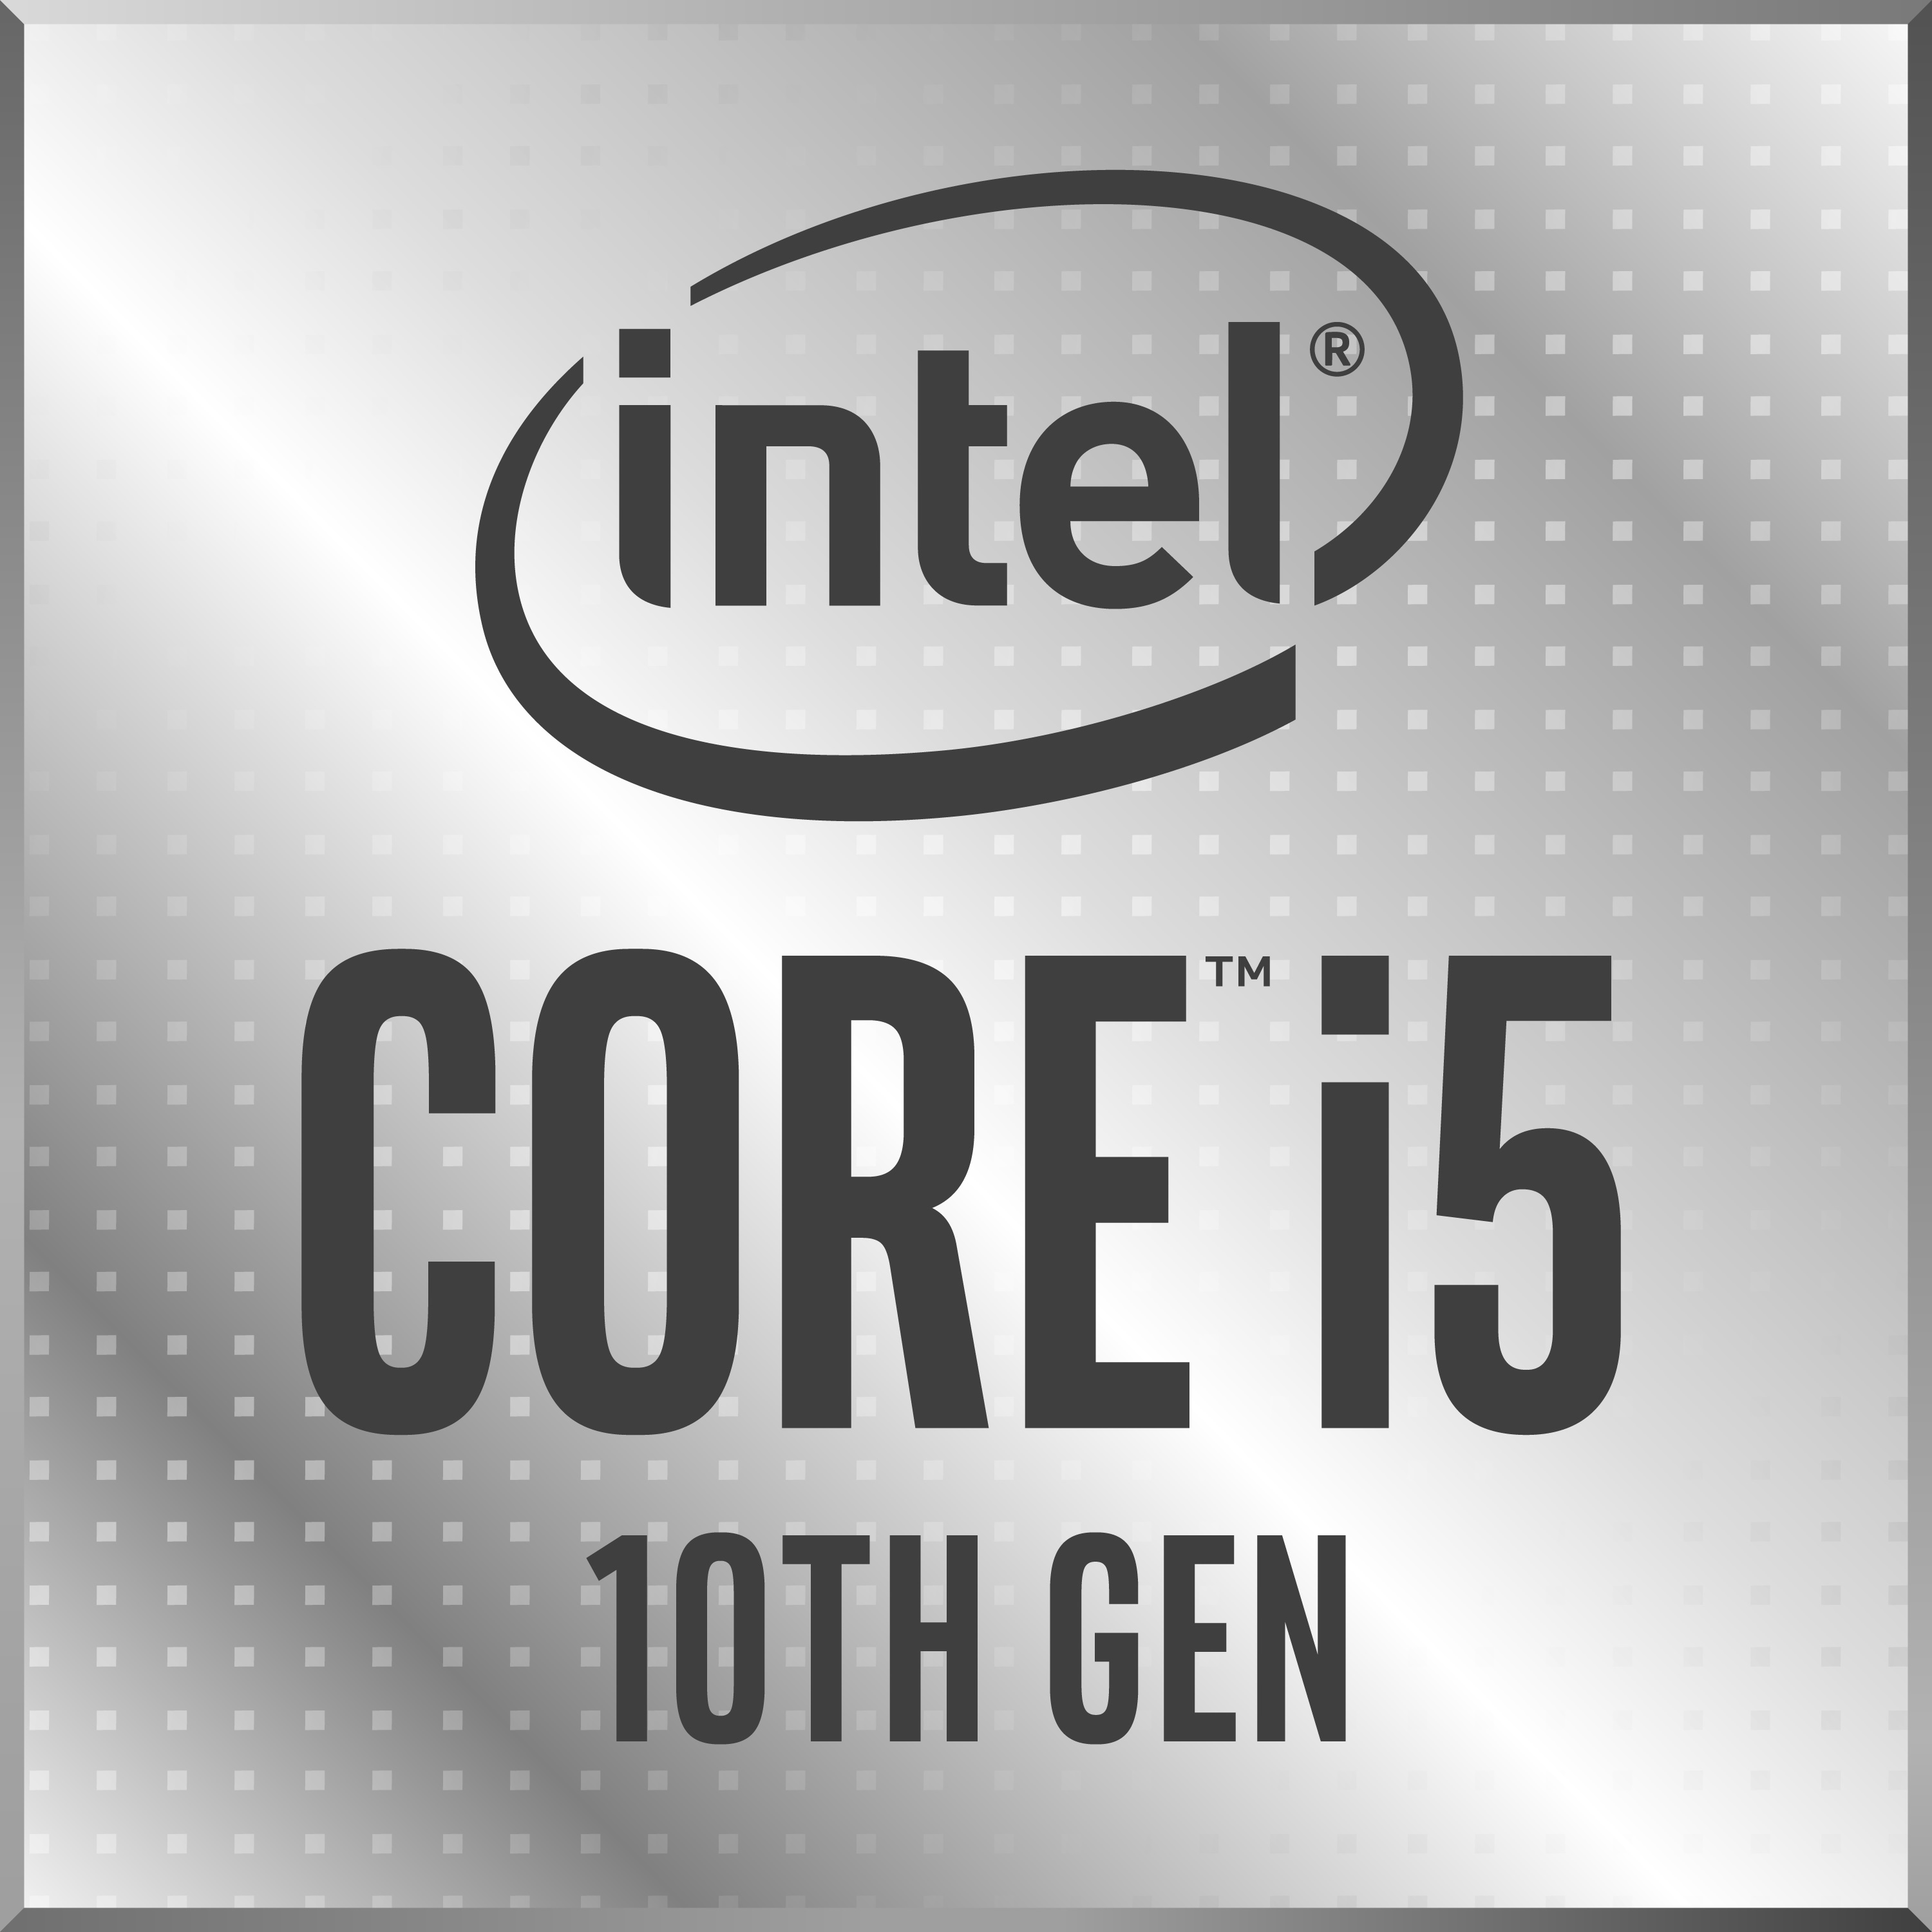 Intel Core i7-10510U Laptop Processor (Comet Lake-U) - NotebookCheck.net  Tech